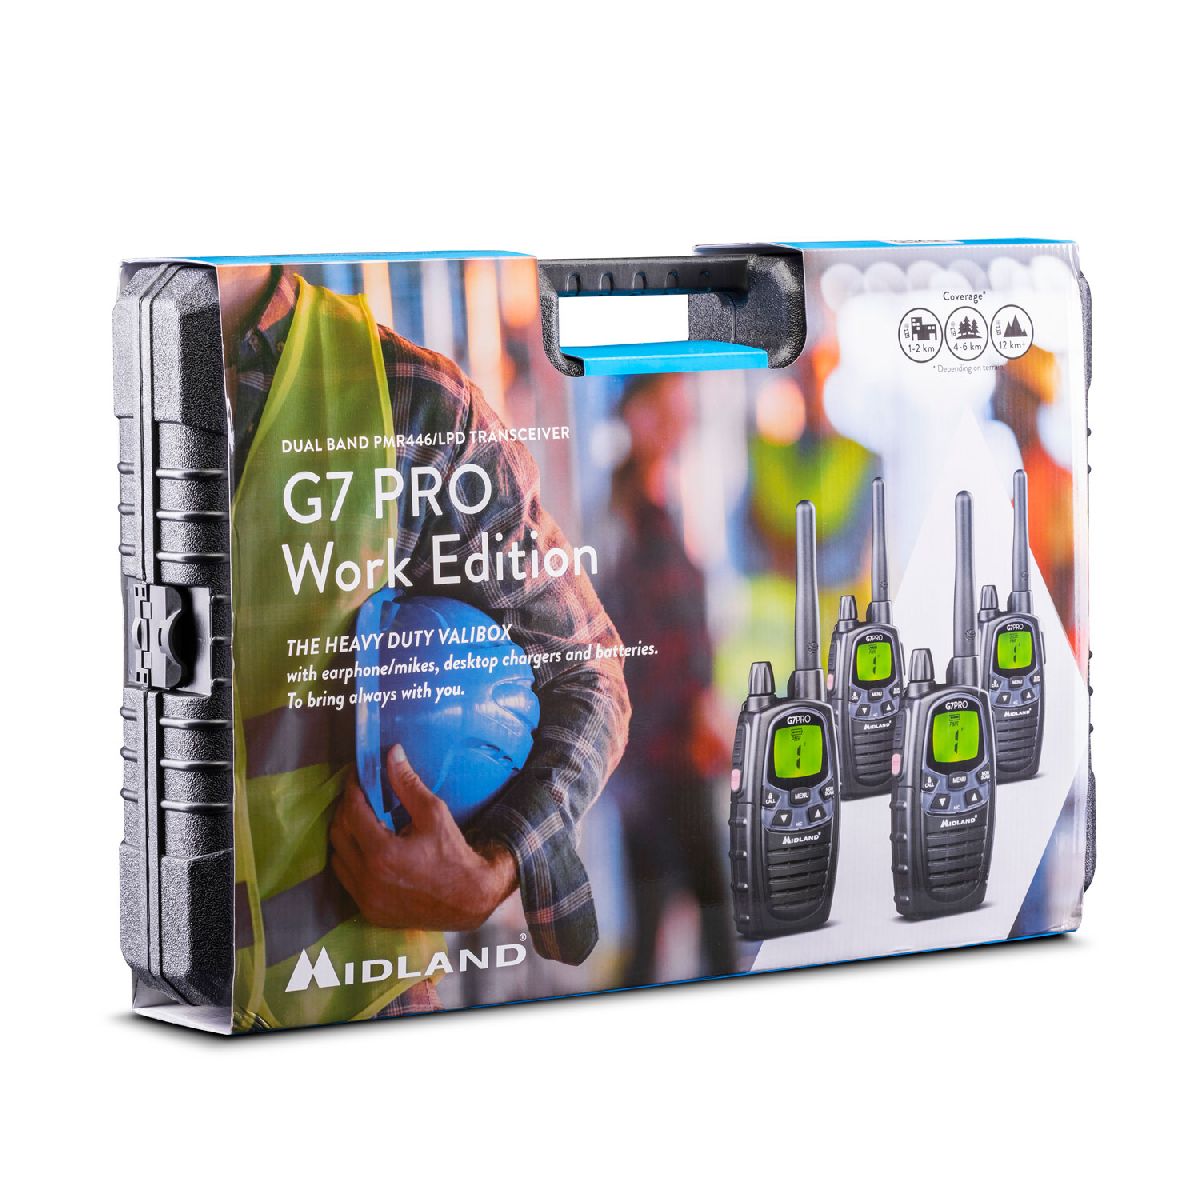 G7Pro Twin PMR/LPD radio portable Set a 4, work edition